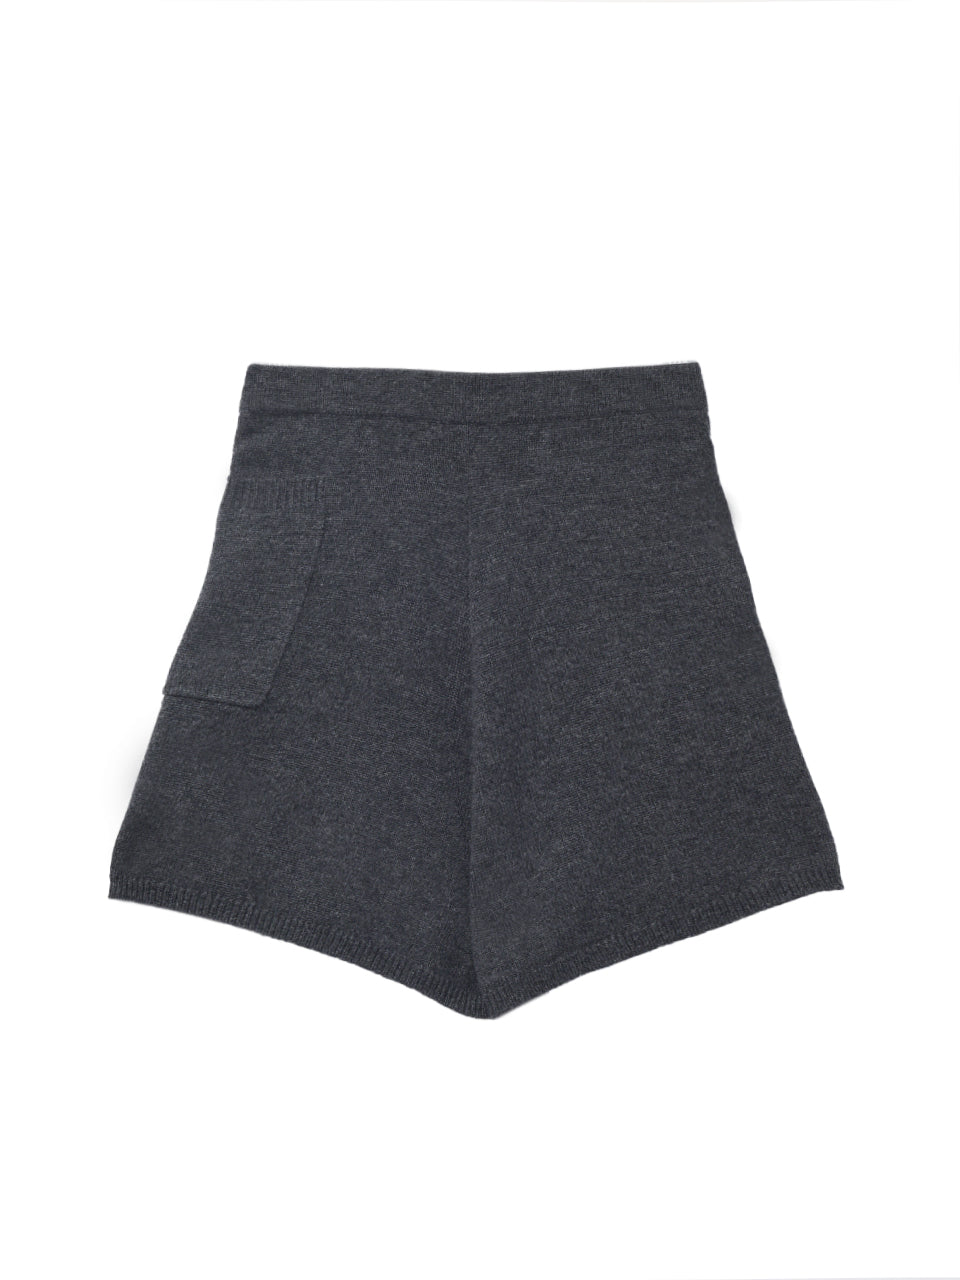 Cashmere Shorts_Graphite